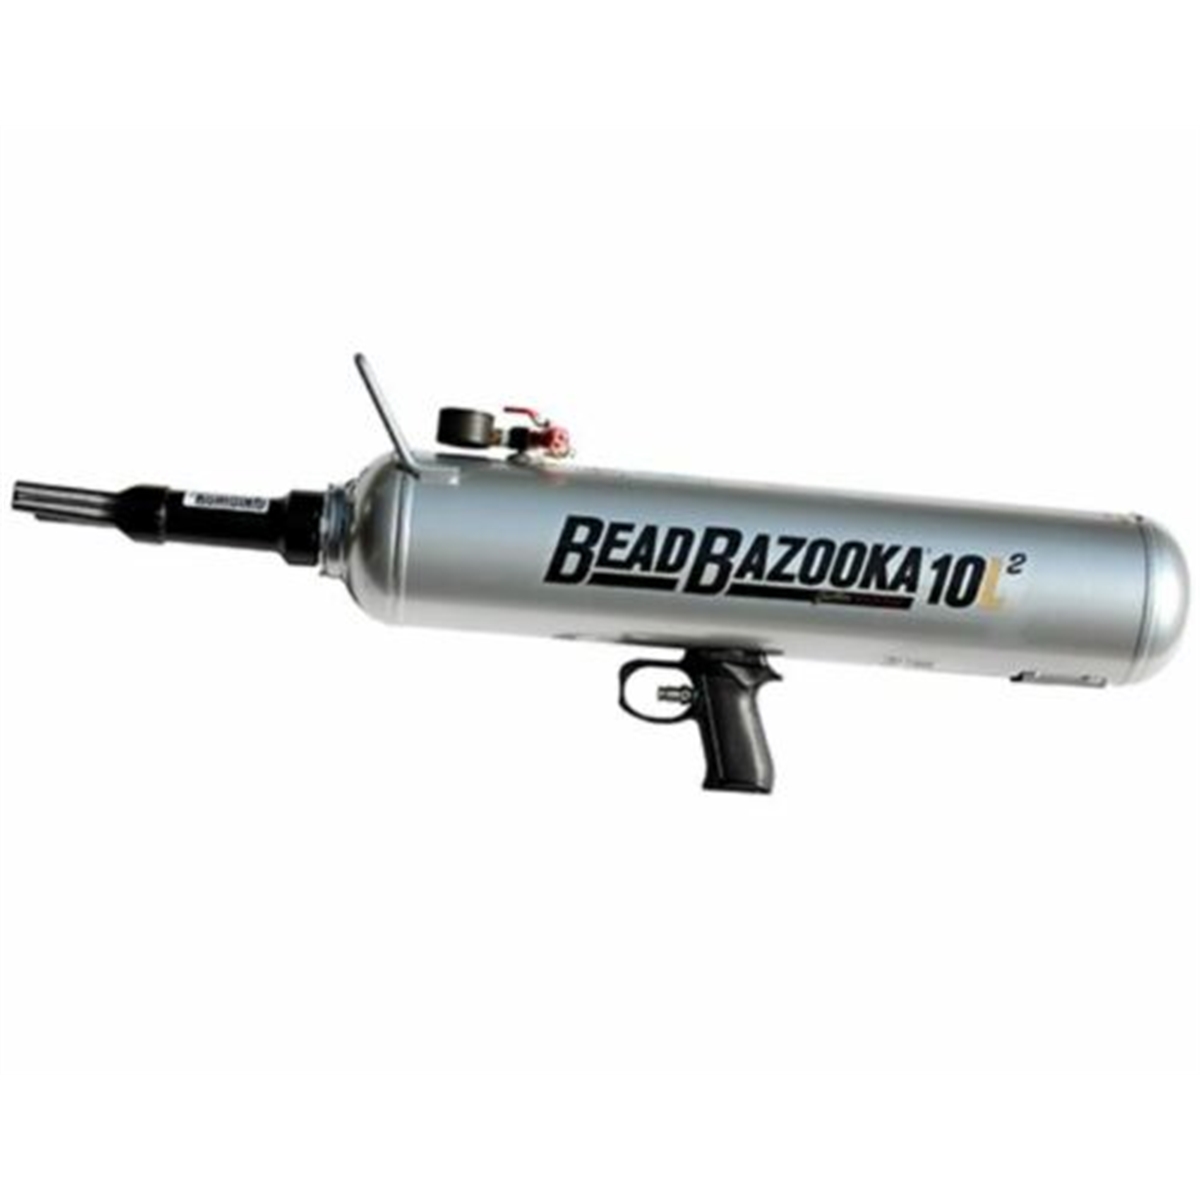 Picture of Gaither Tool GAIGBB10L2 10 Liter Gaither RAR Bead Bazooka